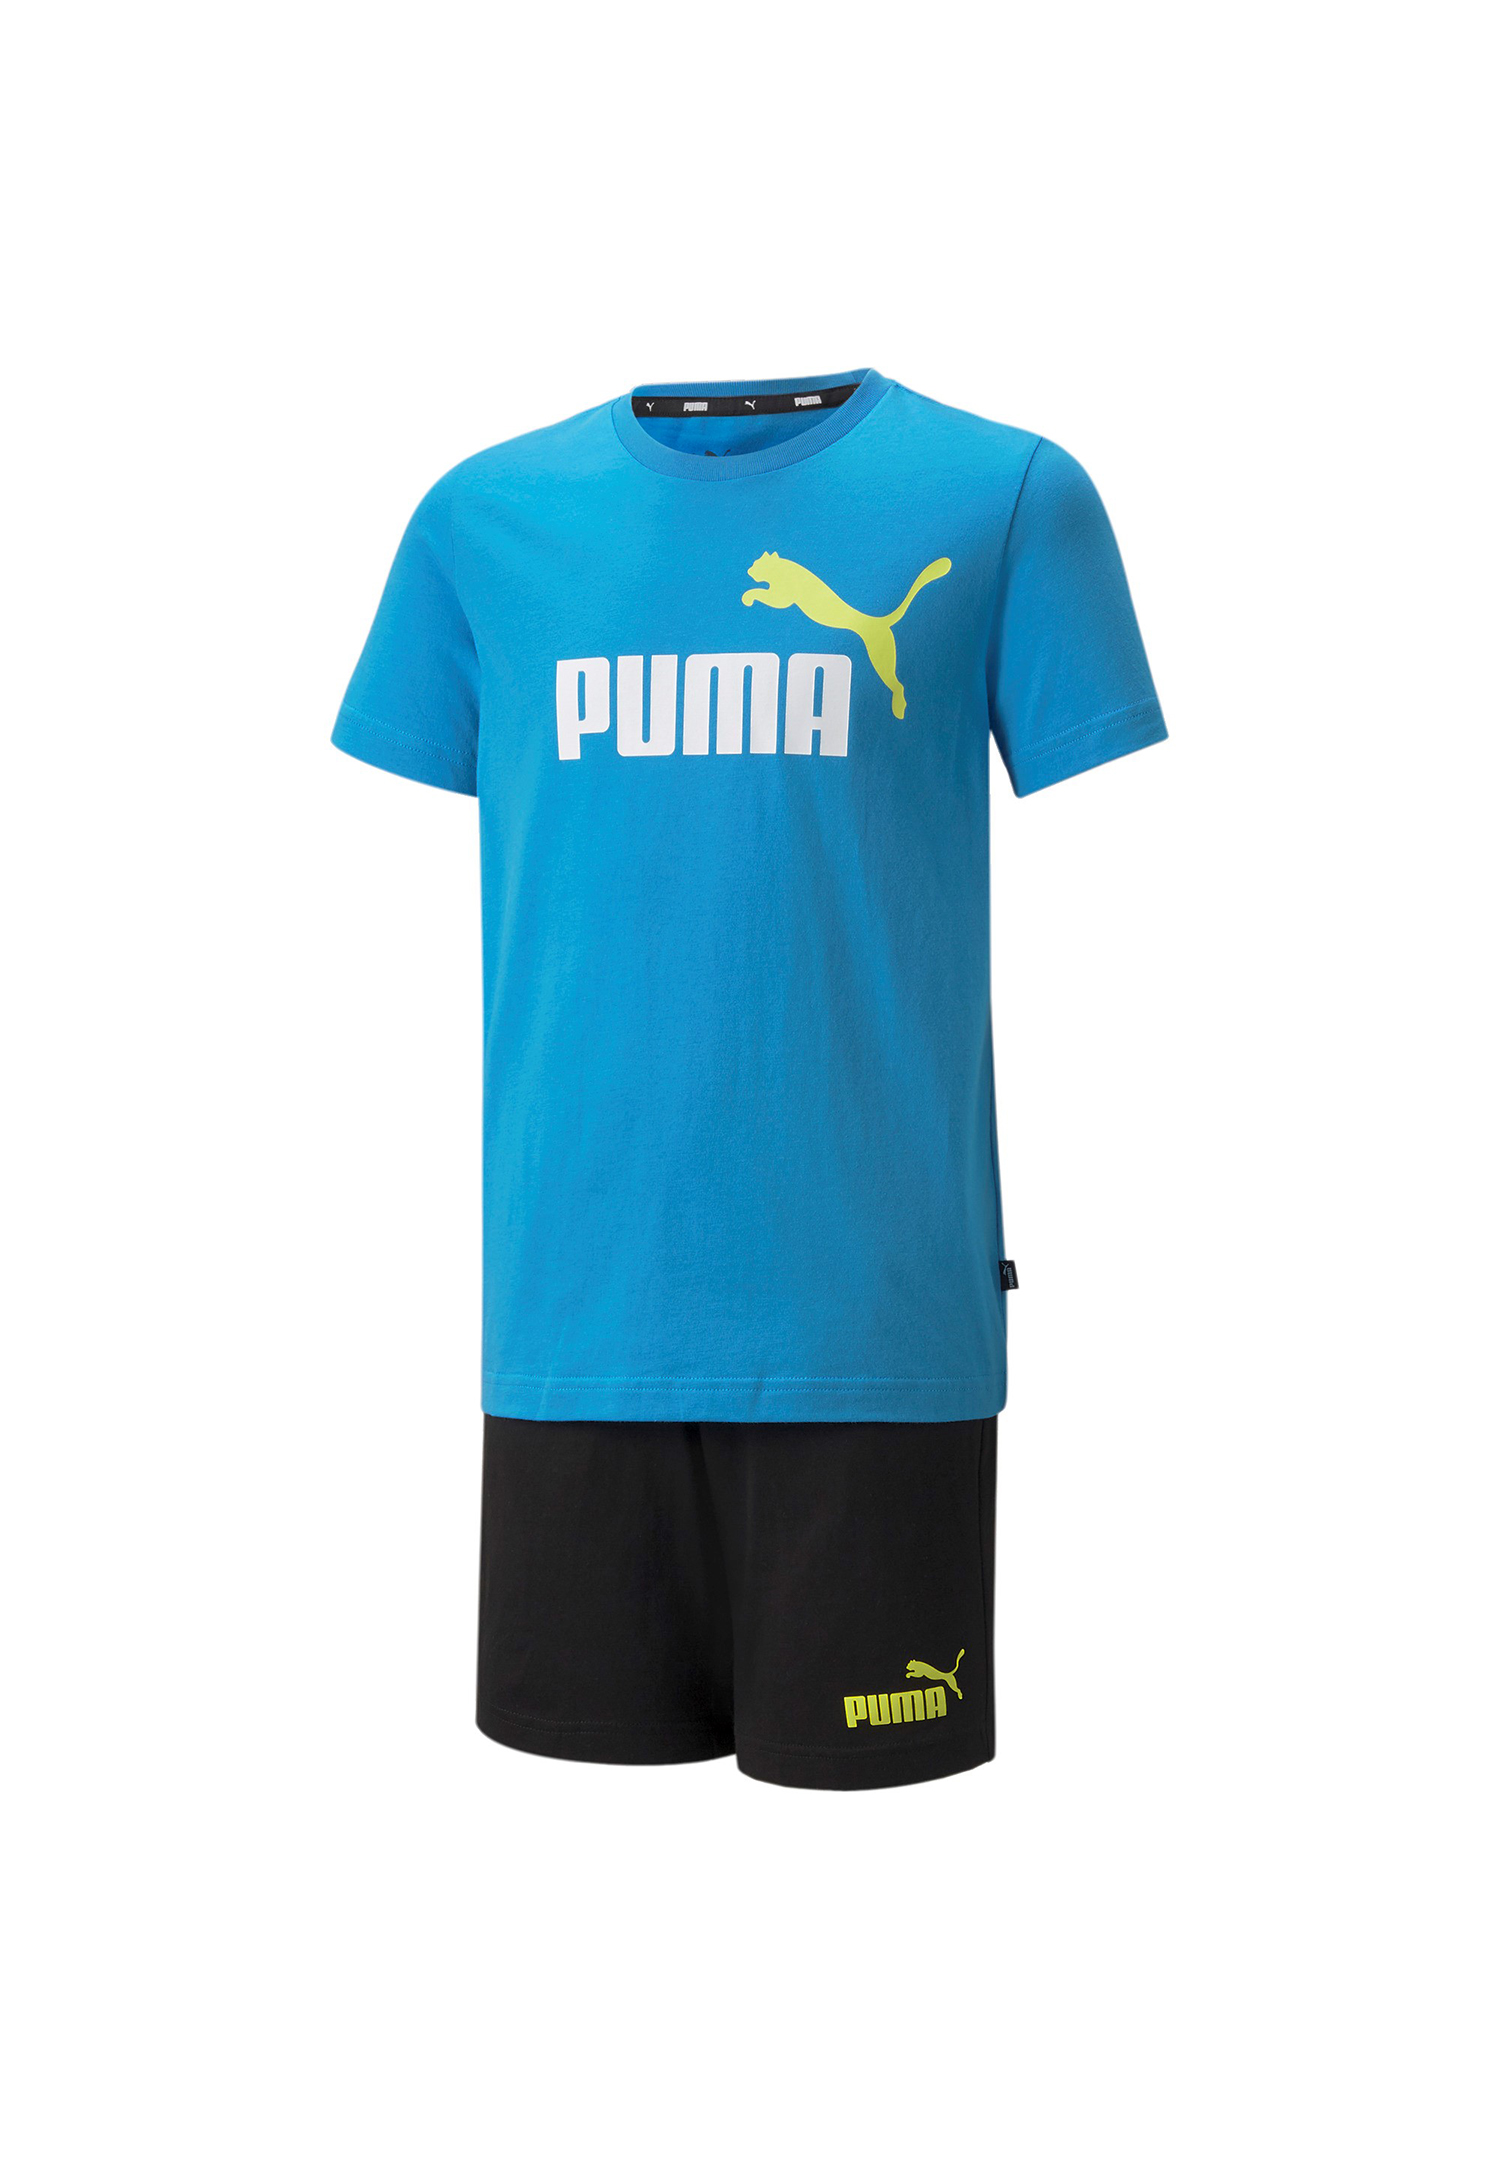 Puma Tee & Shorts Set schwarz/blau 847310 01